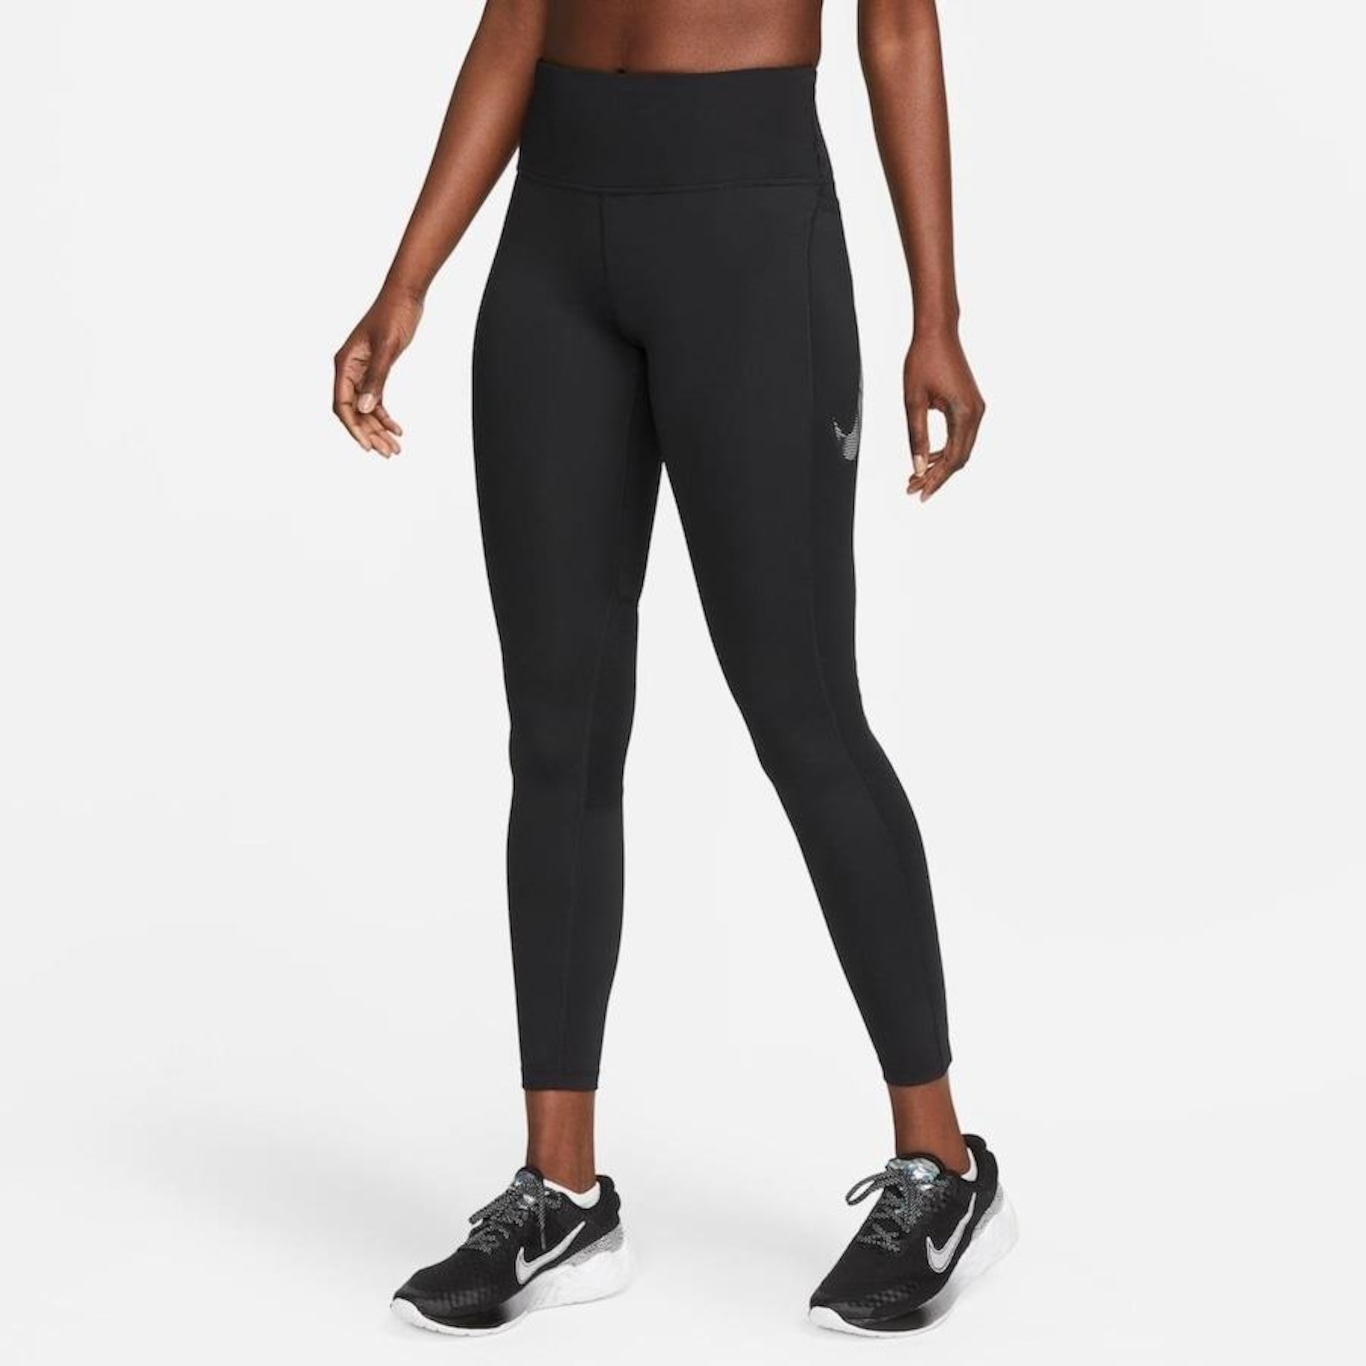 Nike, Dri-FIT Fast 7/8 Running Pants - Black/White